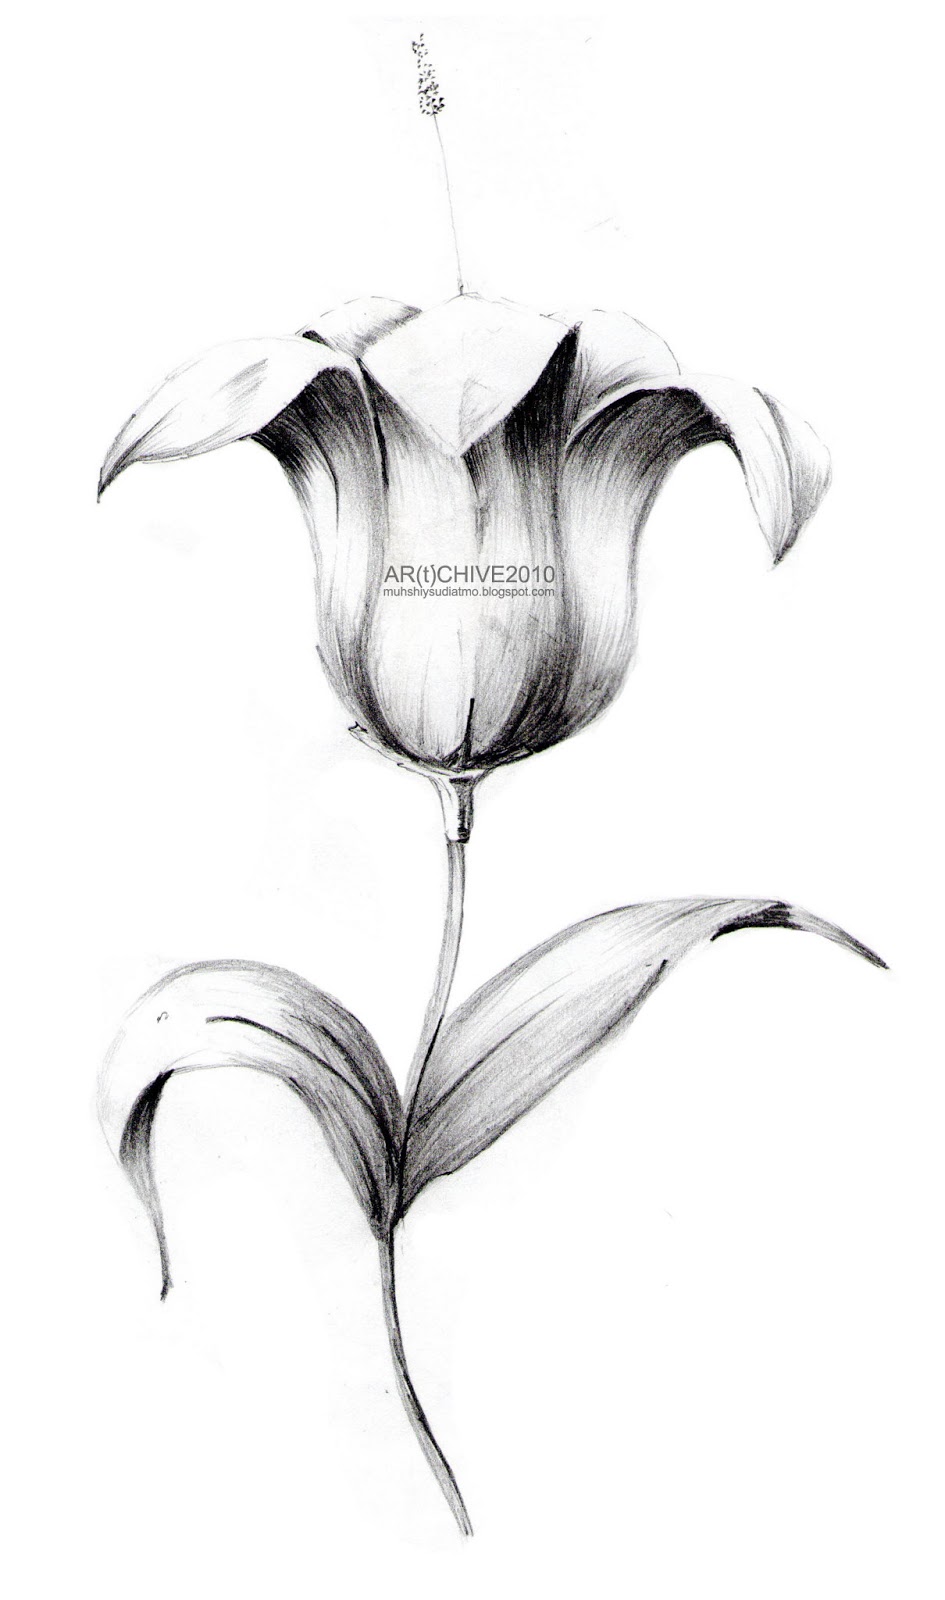 Gambar Menggambar Bunga Mawar Menggunakan Pensil Pemula 